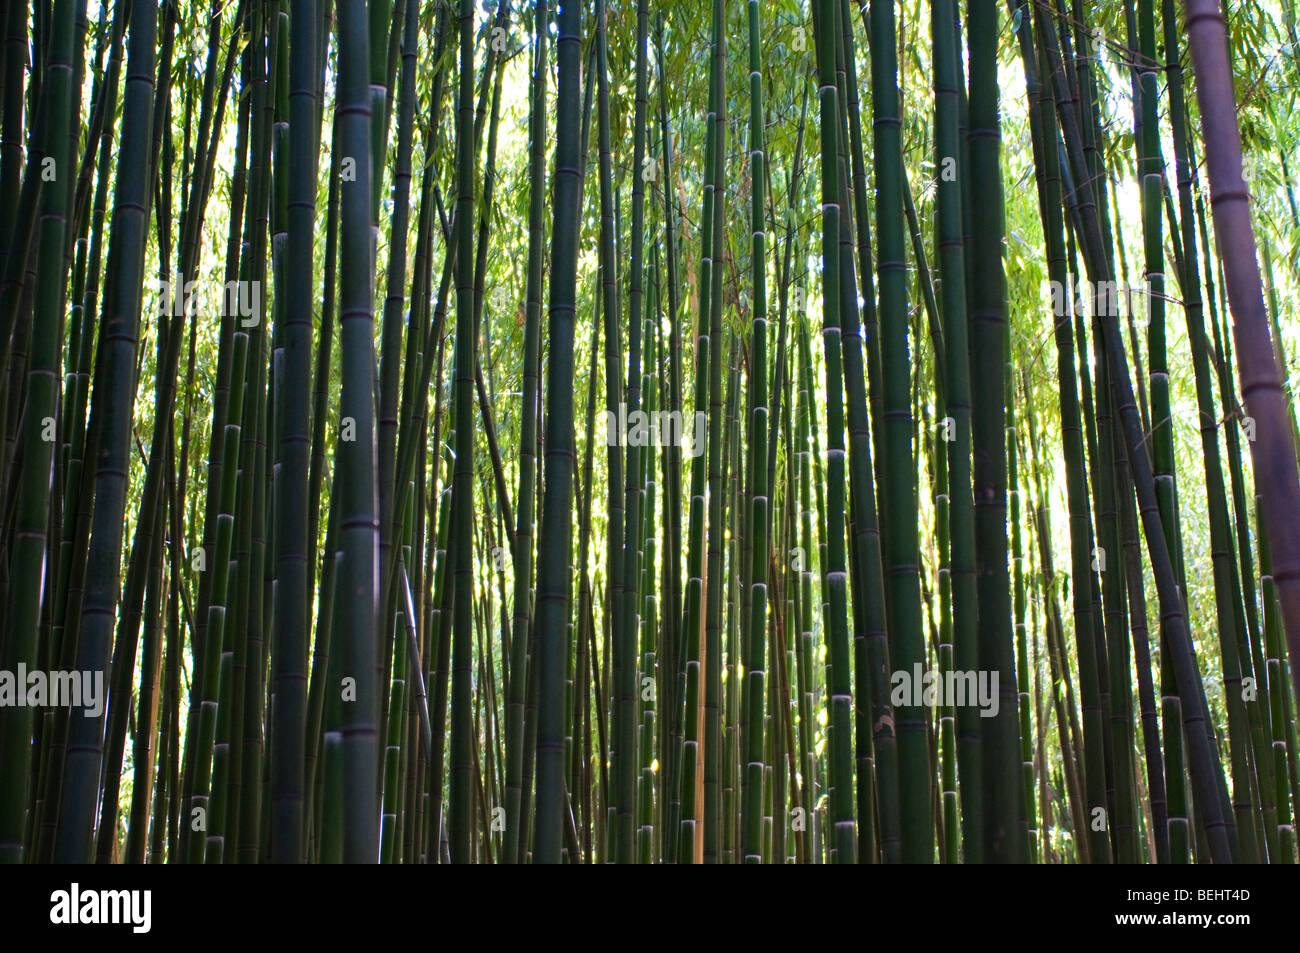 Bamboo garden, Bambouseraie de Prafrance near Anduze, France Stock Photo